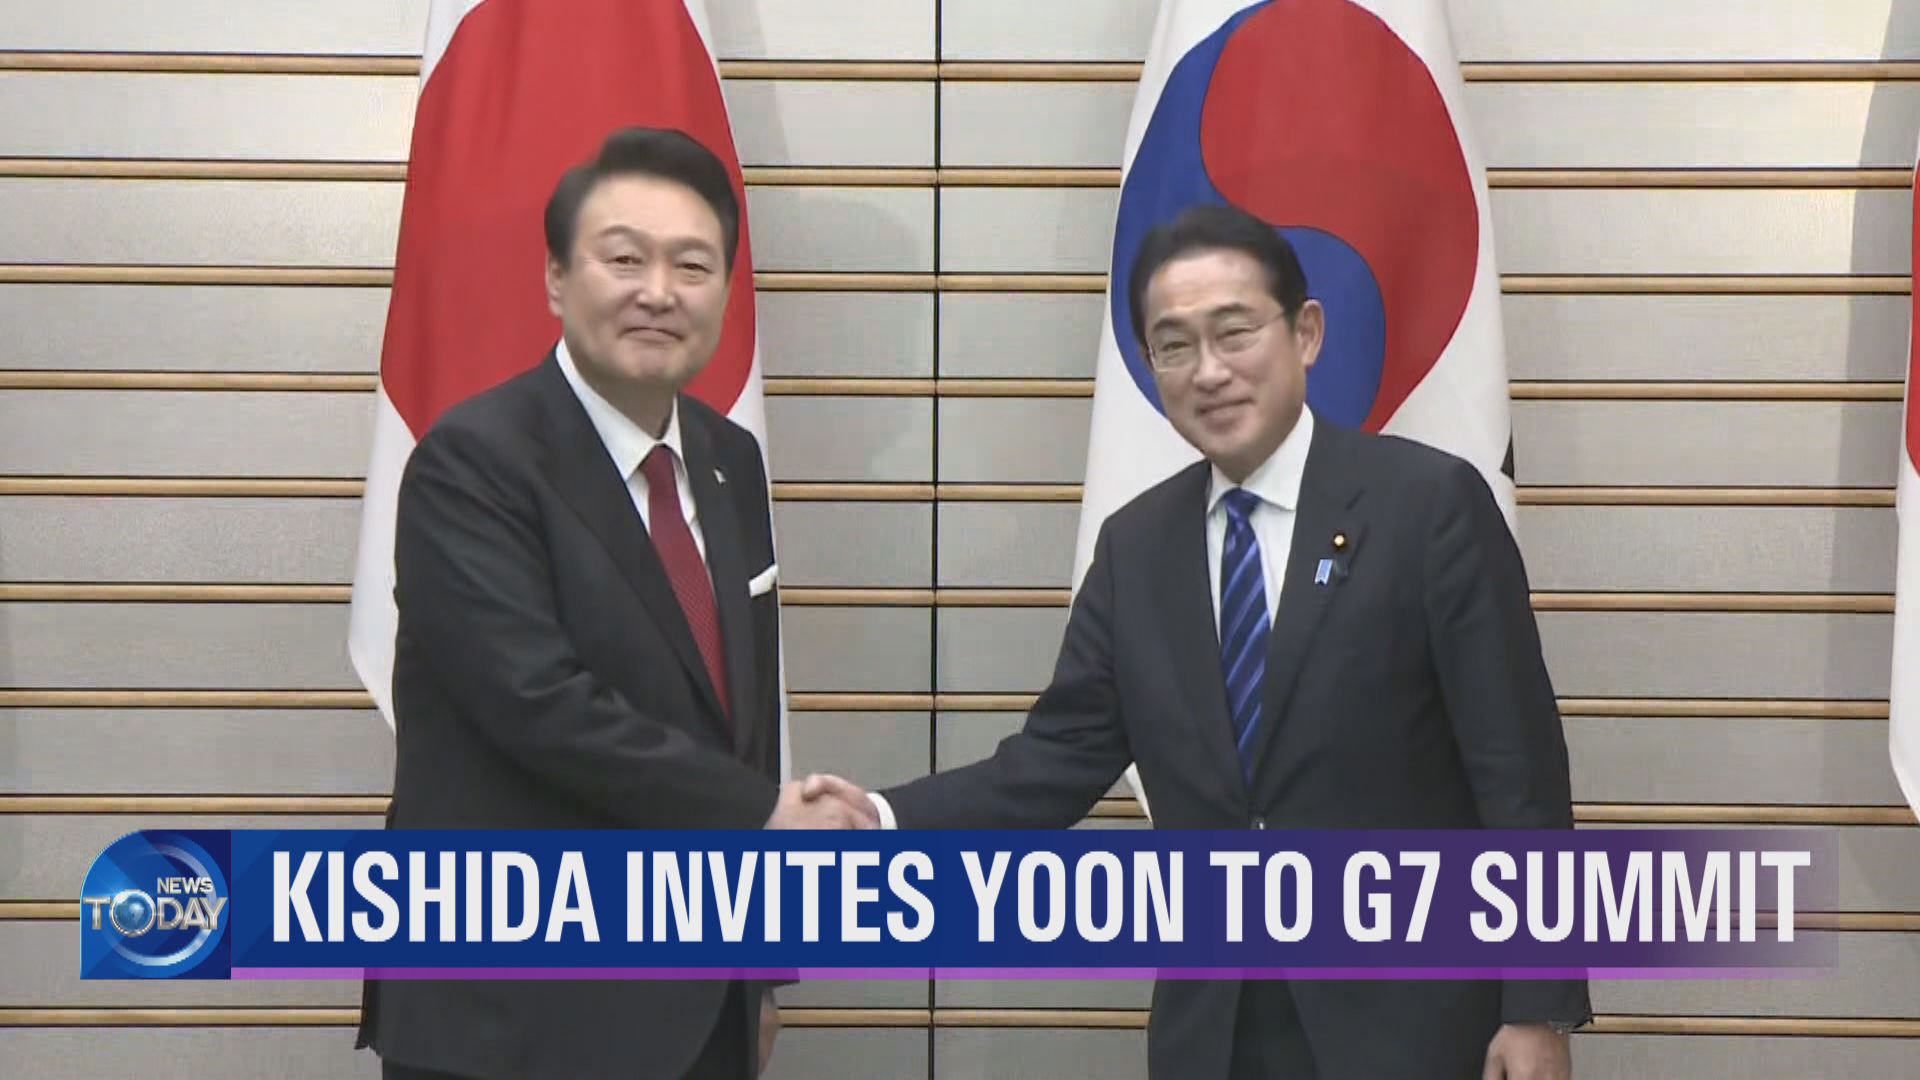 KISHIDA INVITES YOON TO G7 SUMMIT